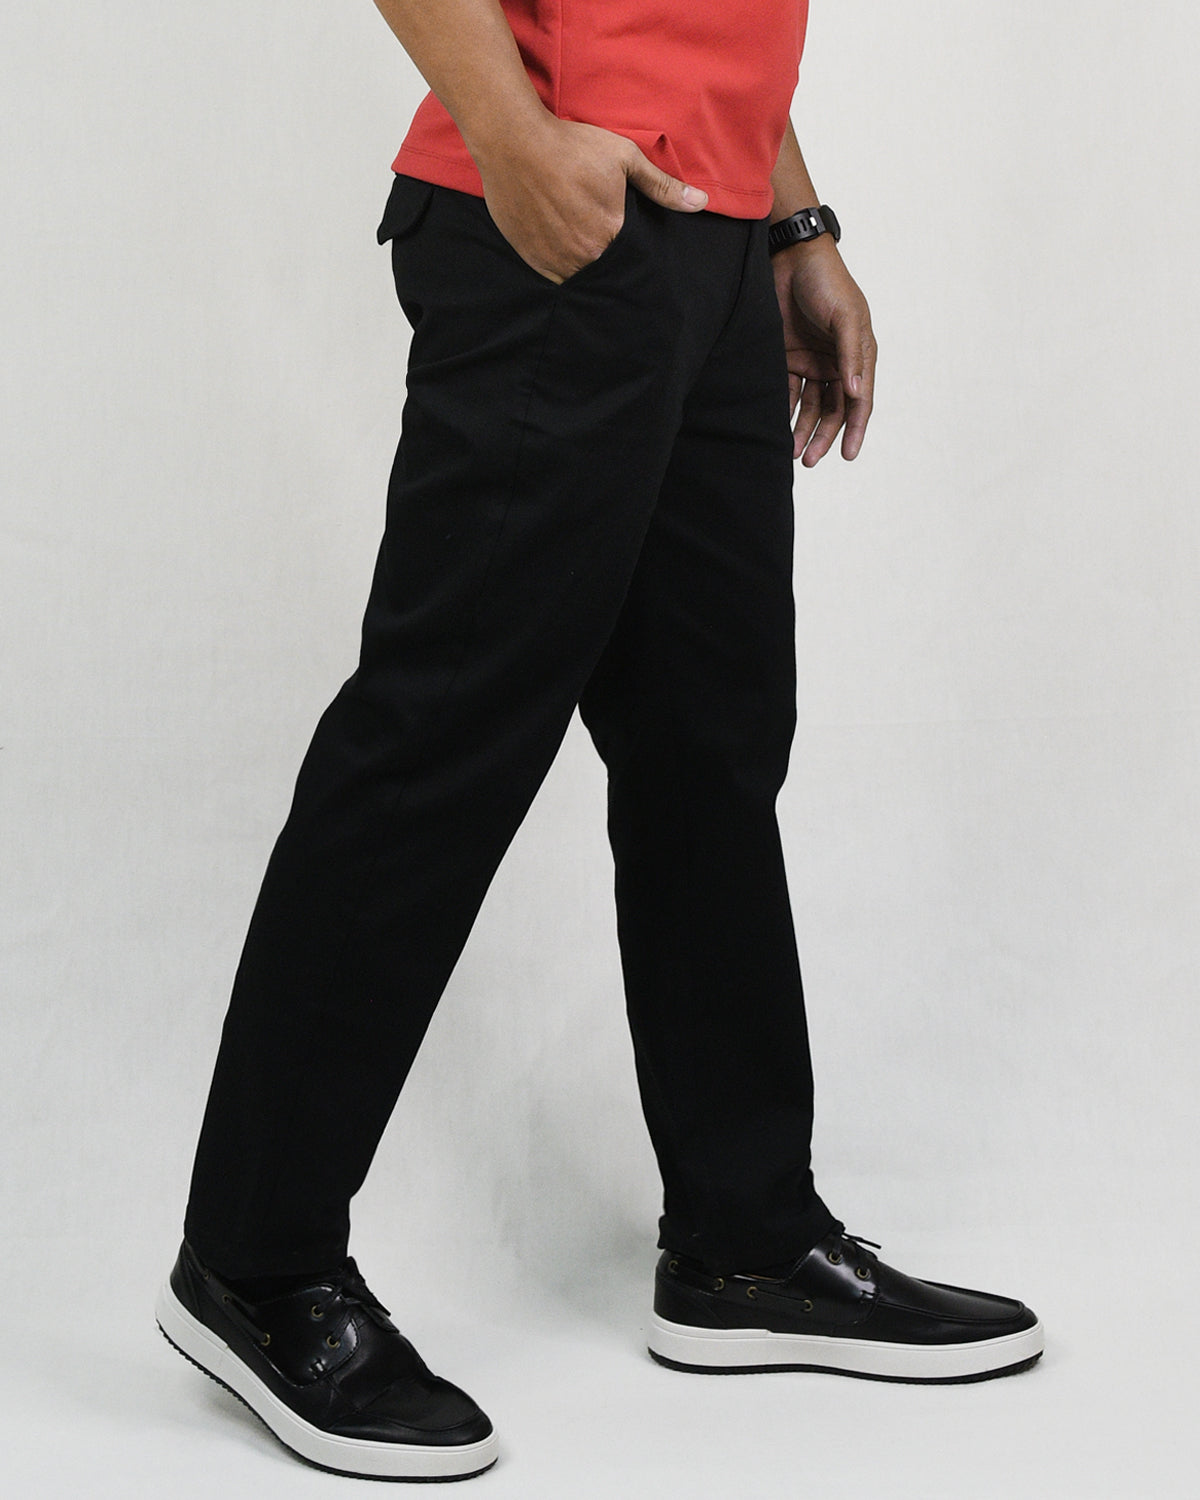 CBS x BAYO (PRE-ORDER) FIELD CBS Male Uniform Set of 4